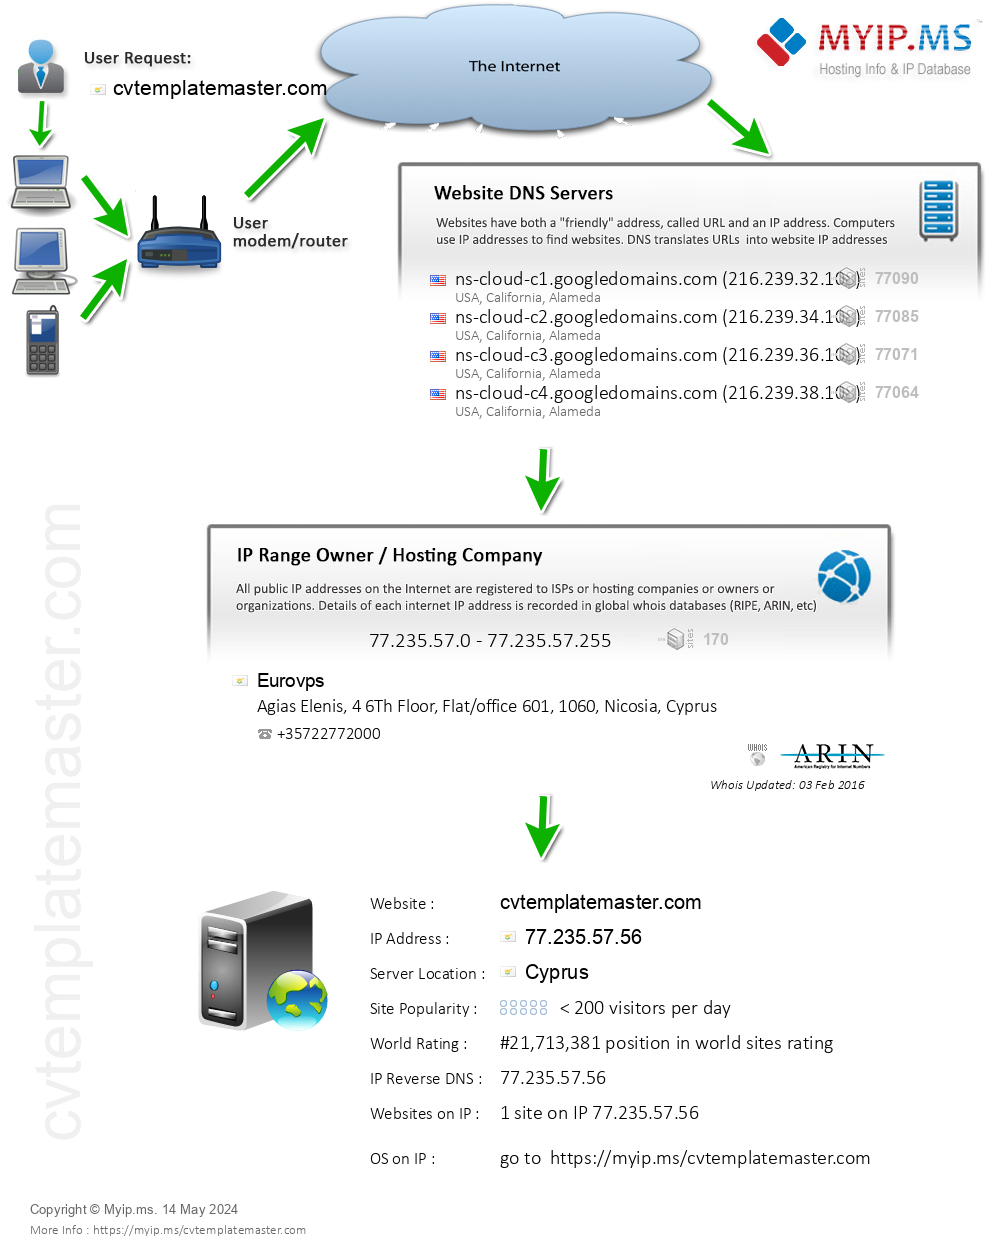 Cvtemplatemaster.com - Website Hosting Visual IP Diagram